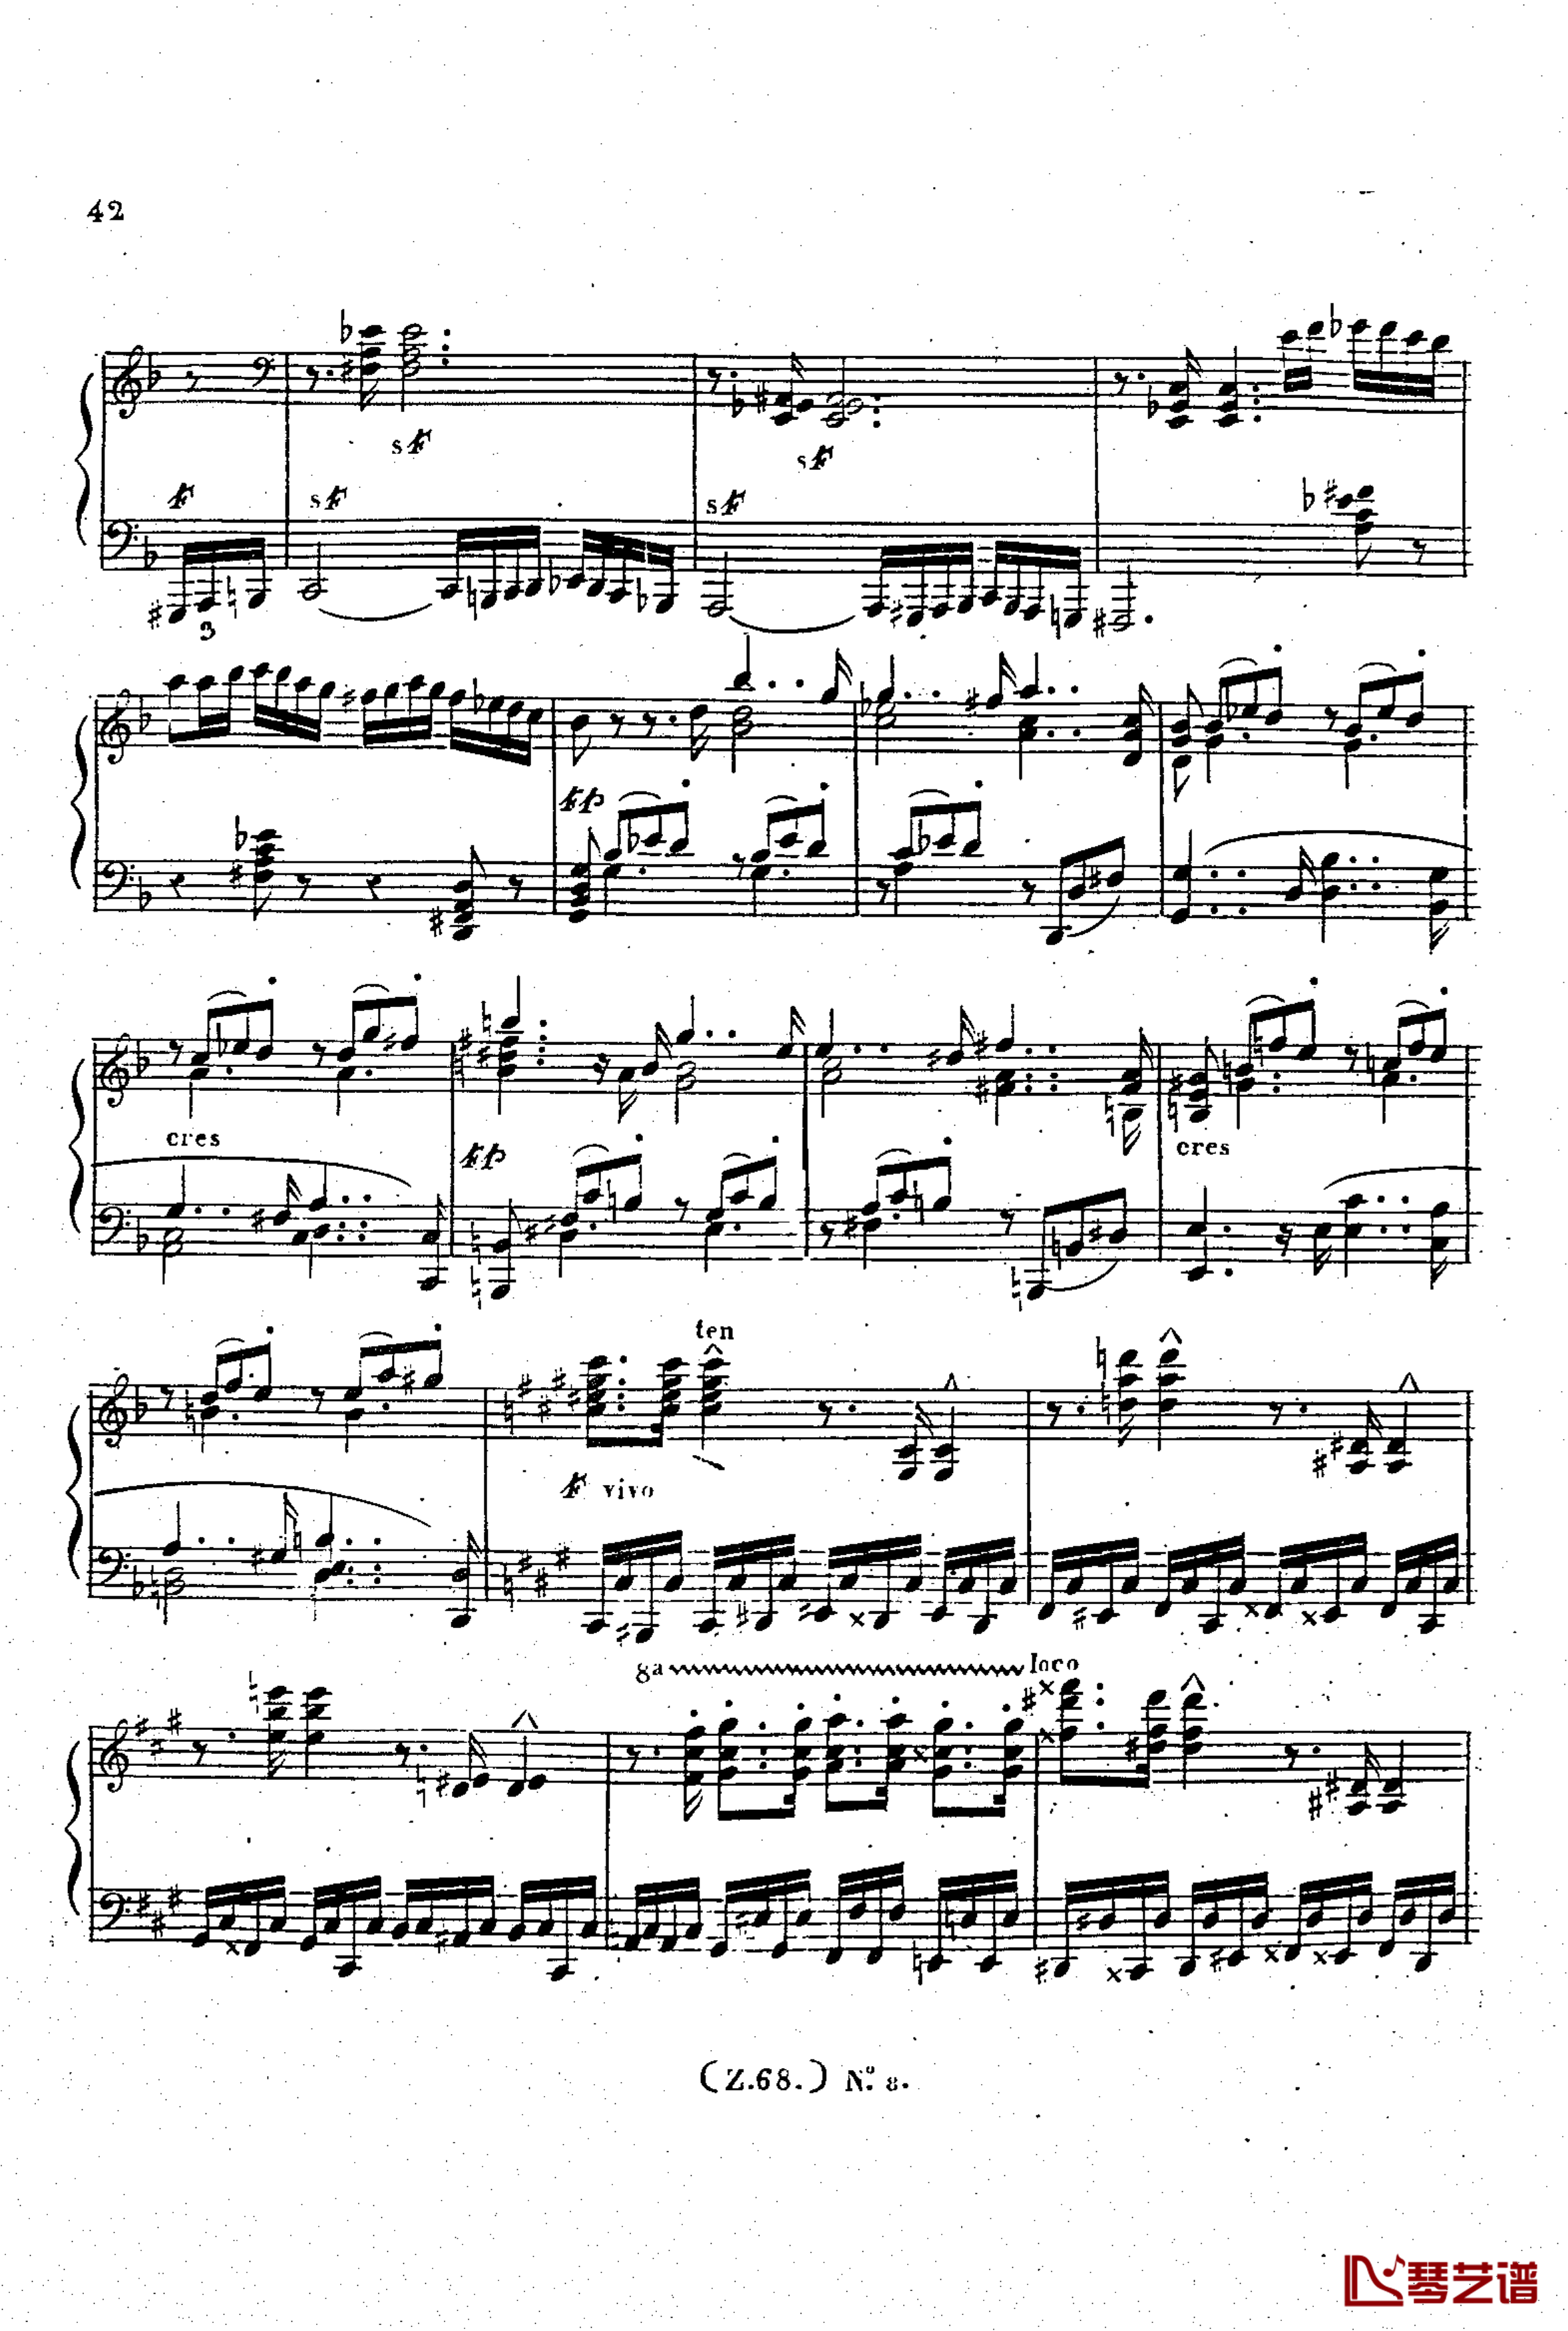  d小调第六钢琴奏鸣曲 Op.124钢琴谱-车尔尼-Czerny43